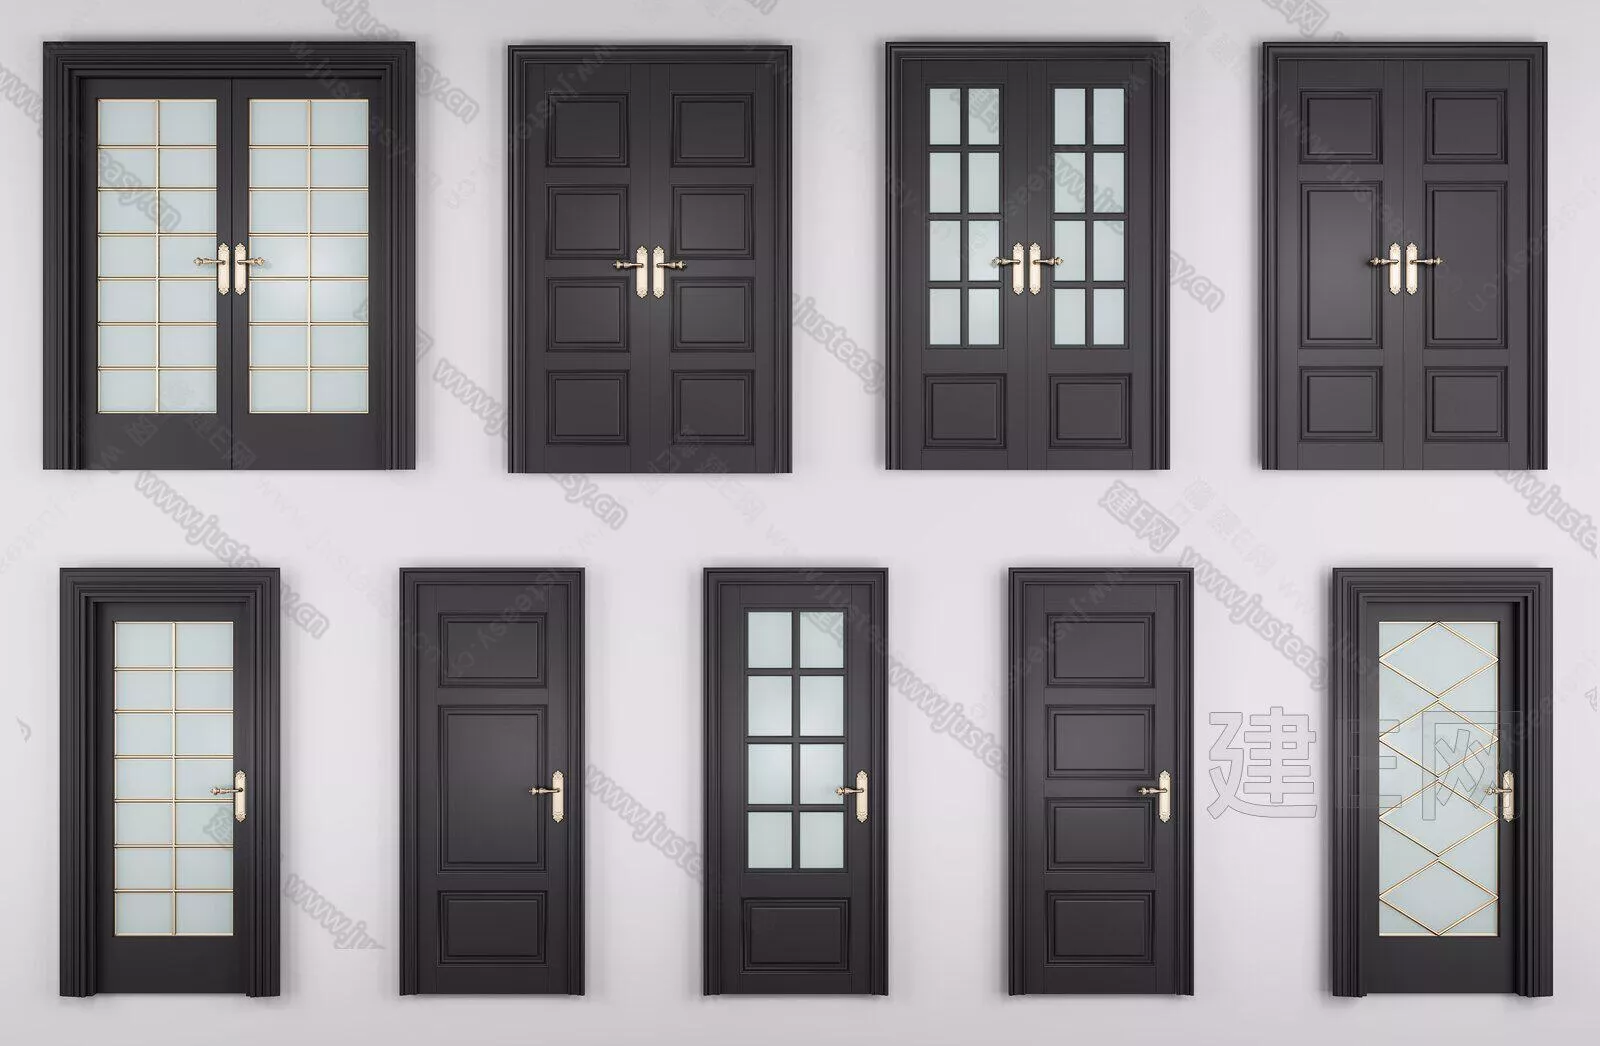 MODERN DOOR AND WINDOWS - SKETCHUP 3D MODEL - ENSCAPE - 111168853